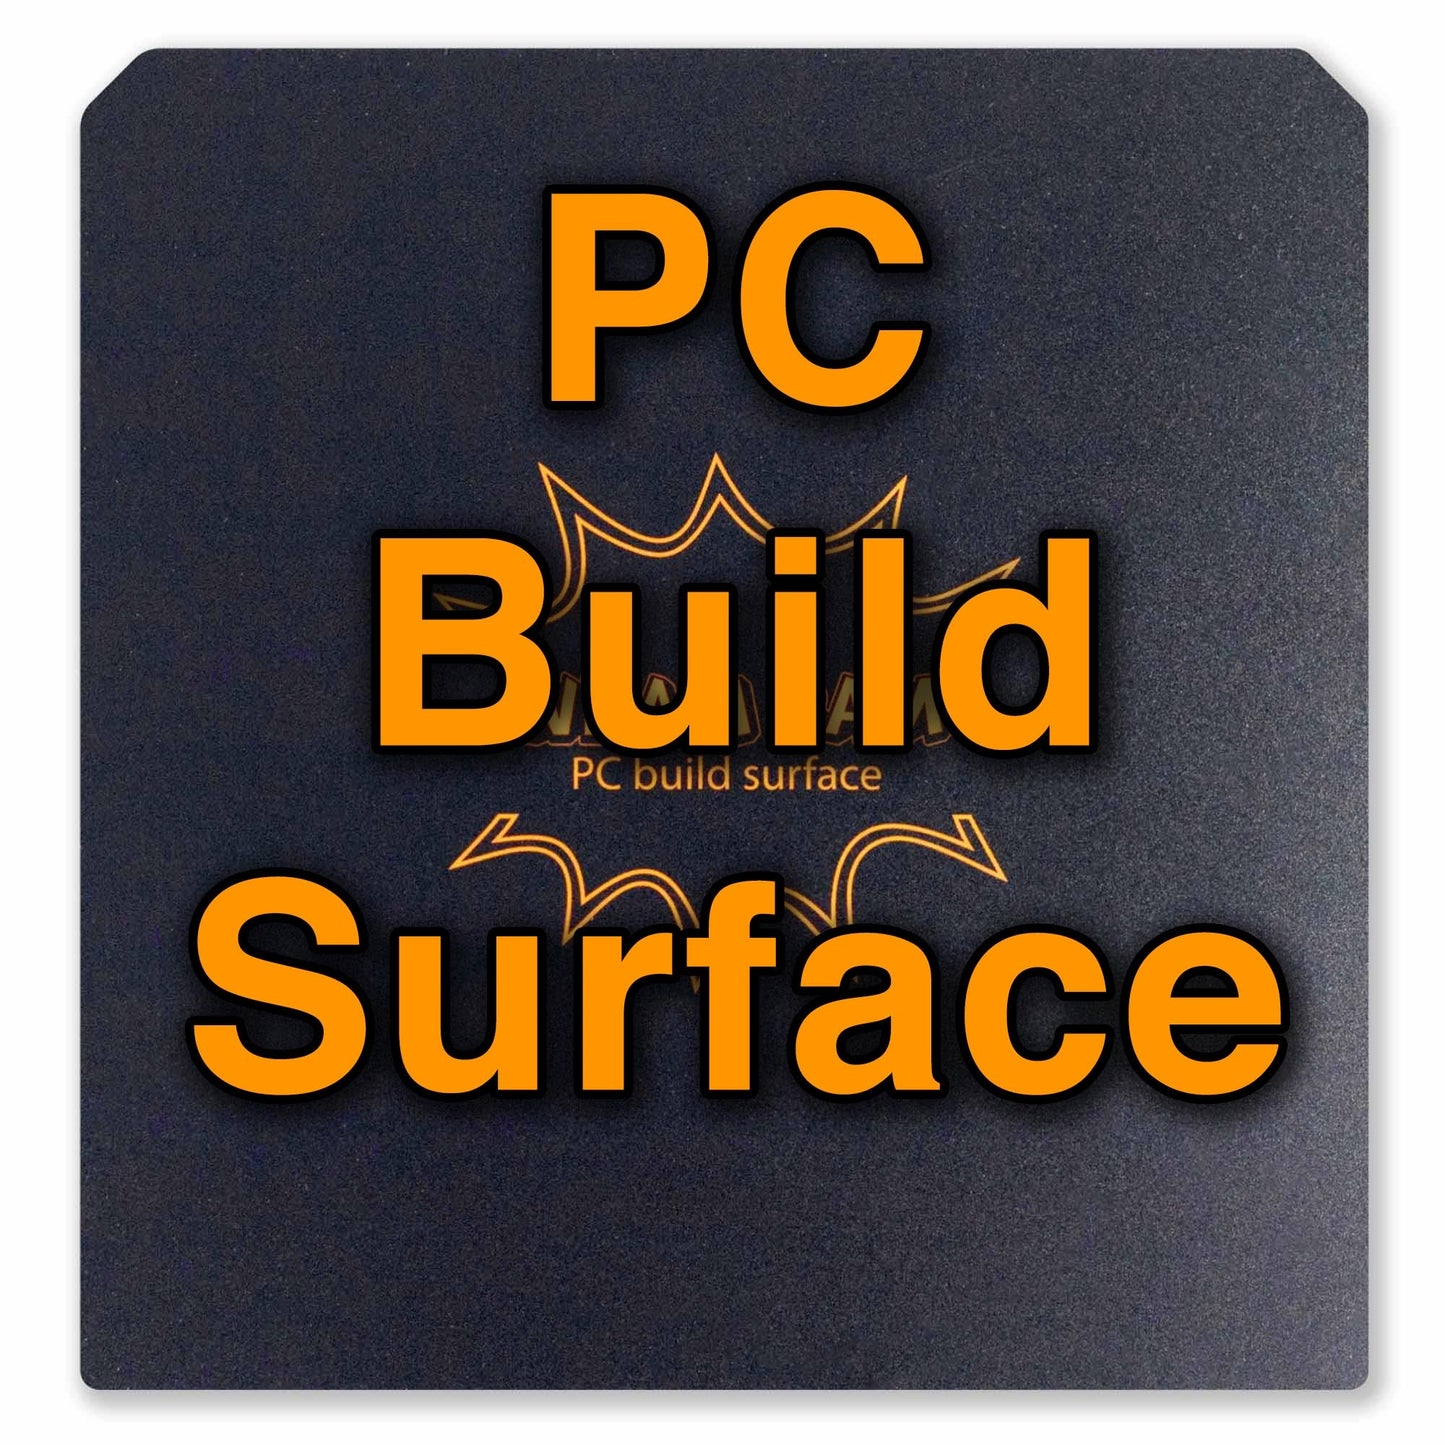 PC Build Surface (Classic Black) - 255 x 245 - Creality CR 6 SE, Robo3D R1+